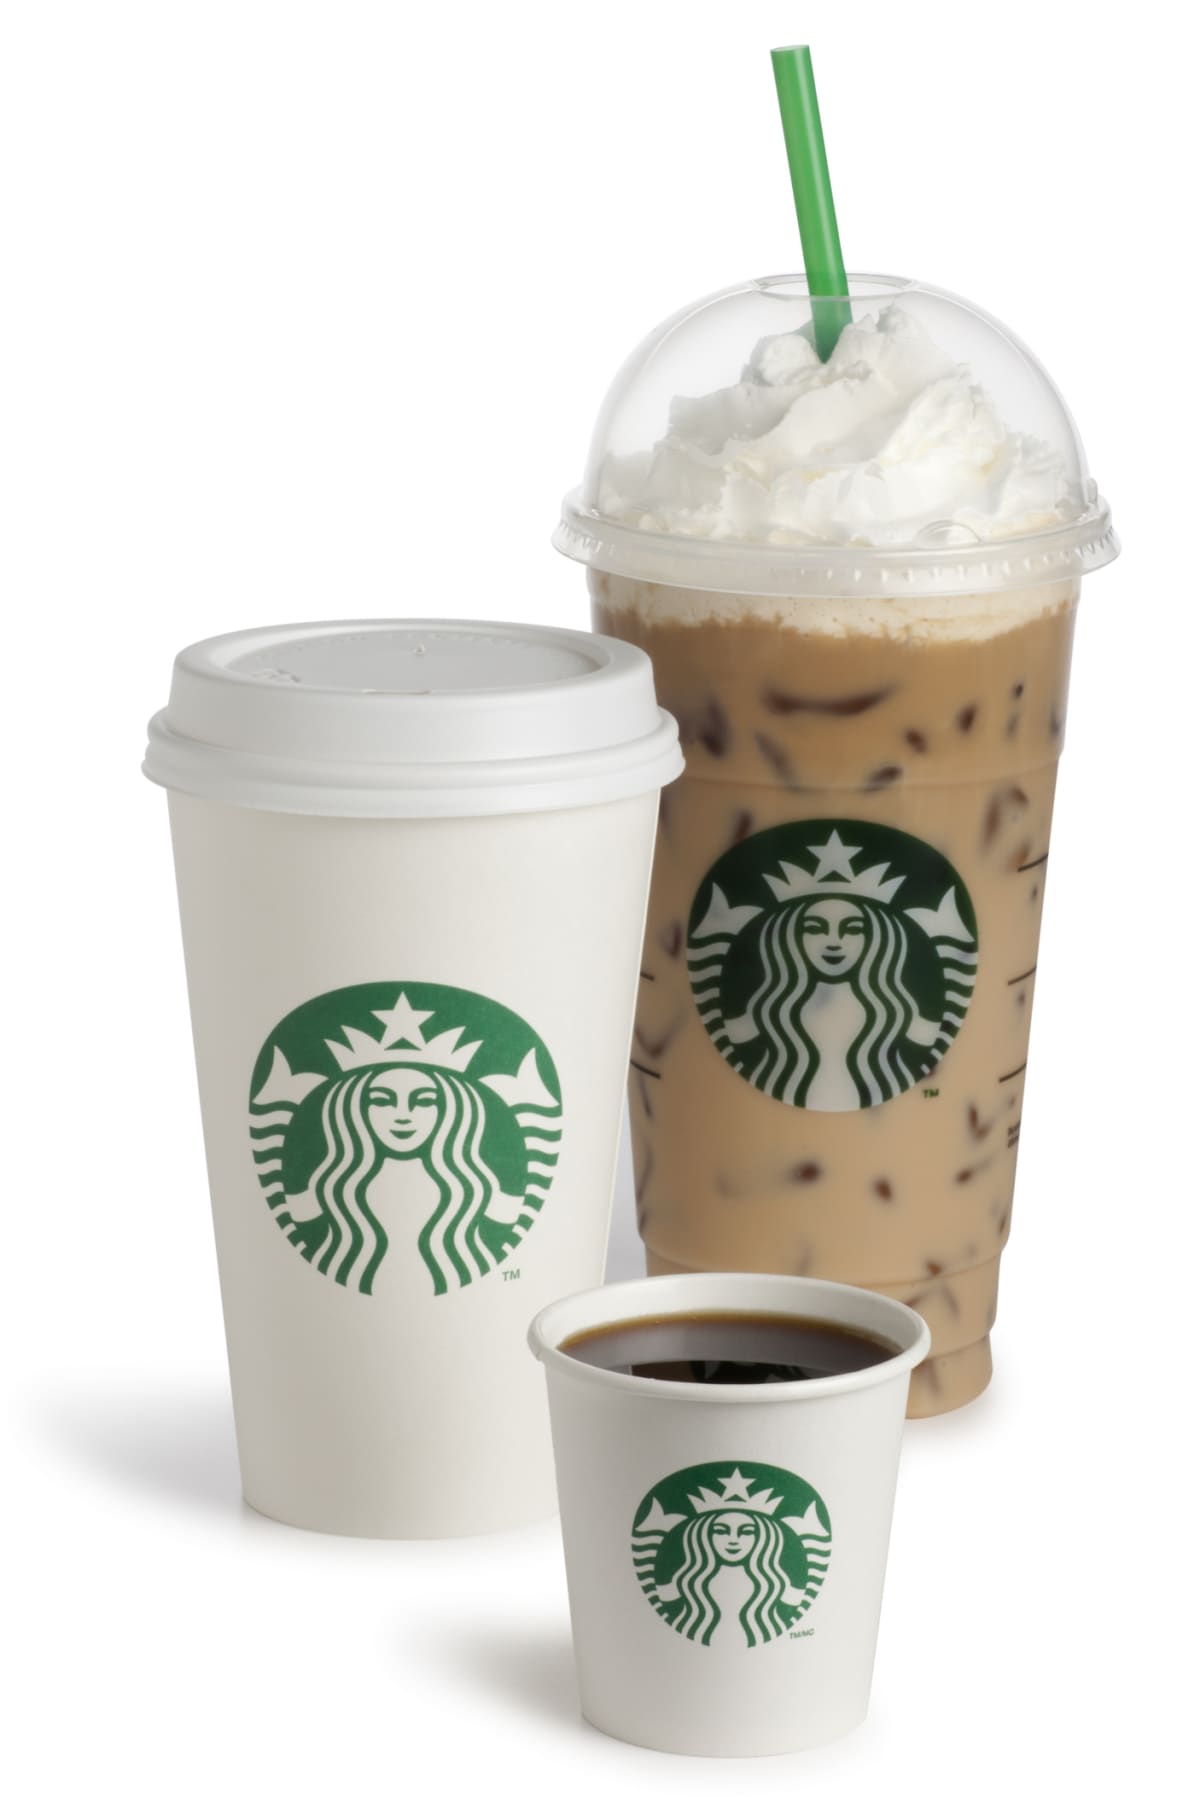 Three different Starbucks cups